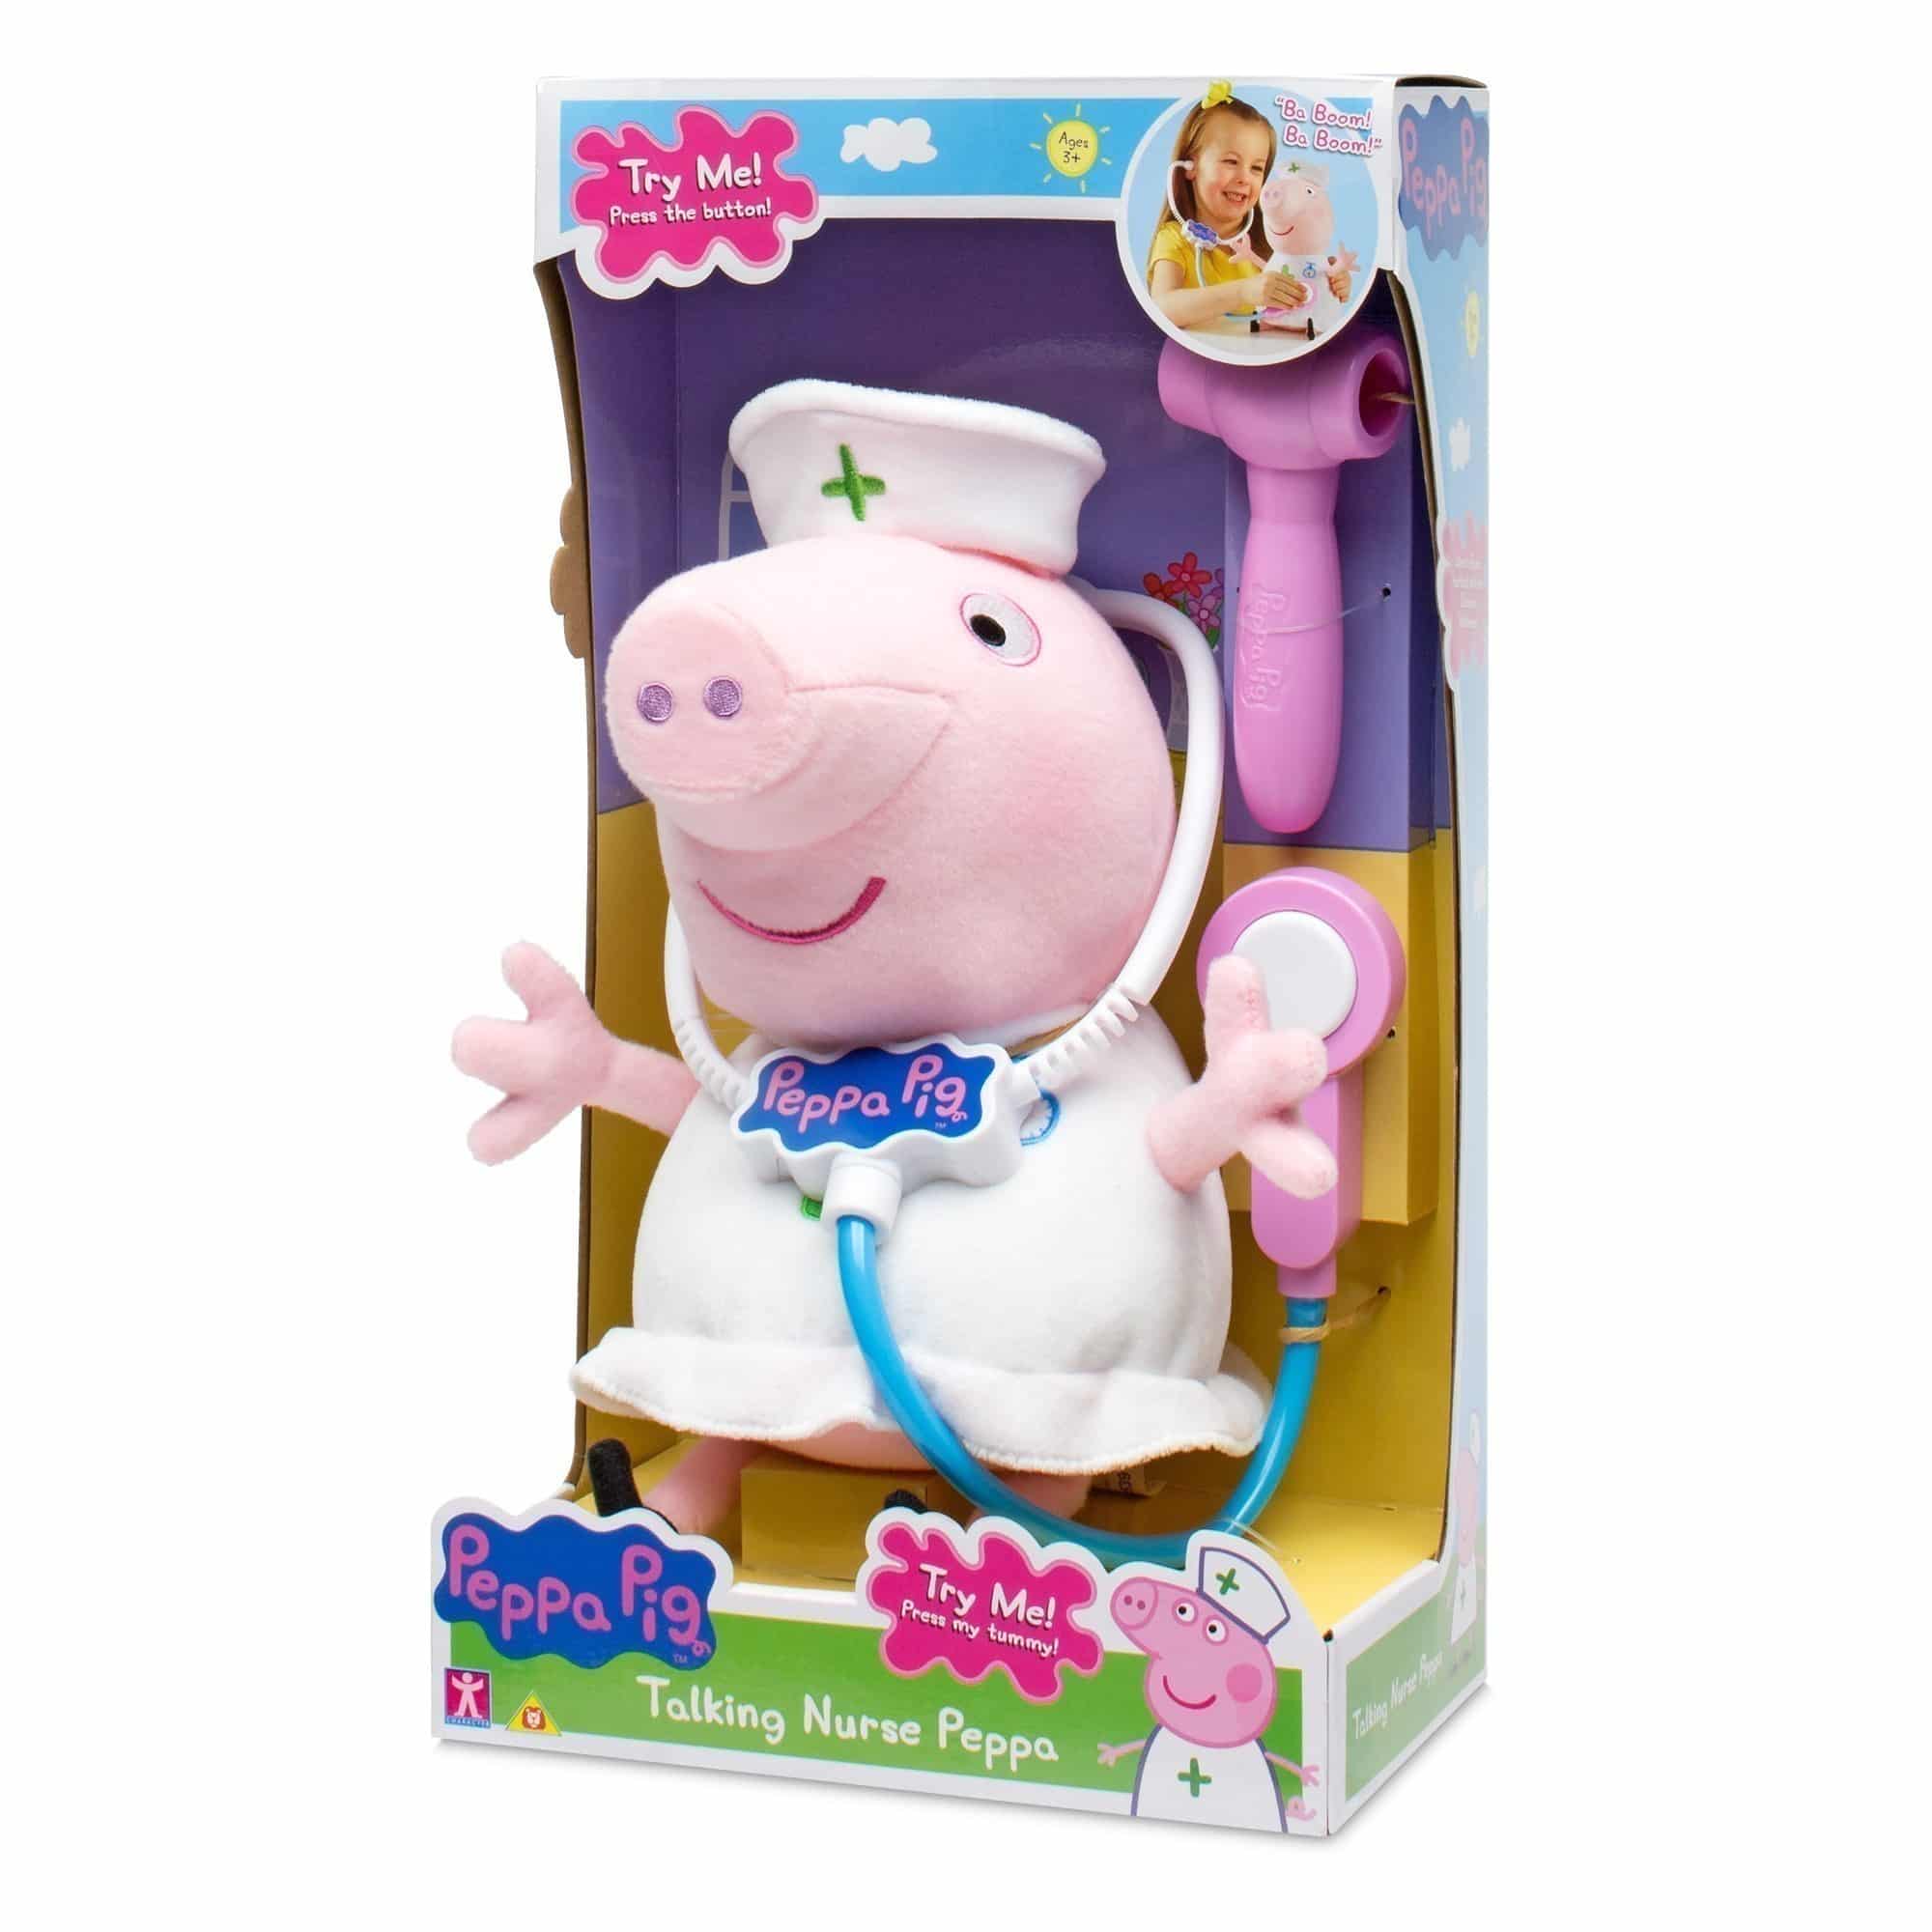 Peppa Pig - Talking Nurse Peppa